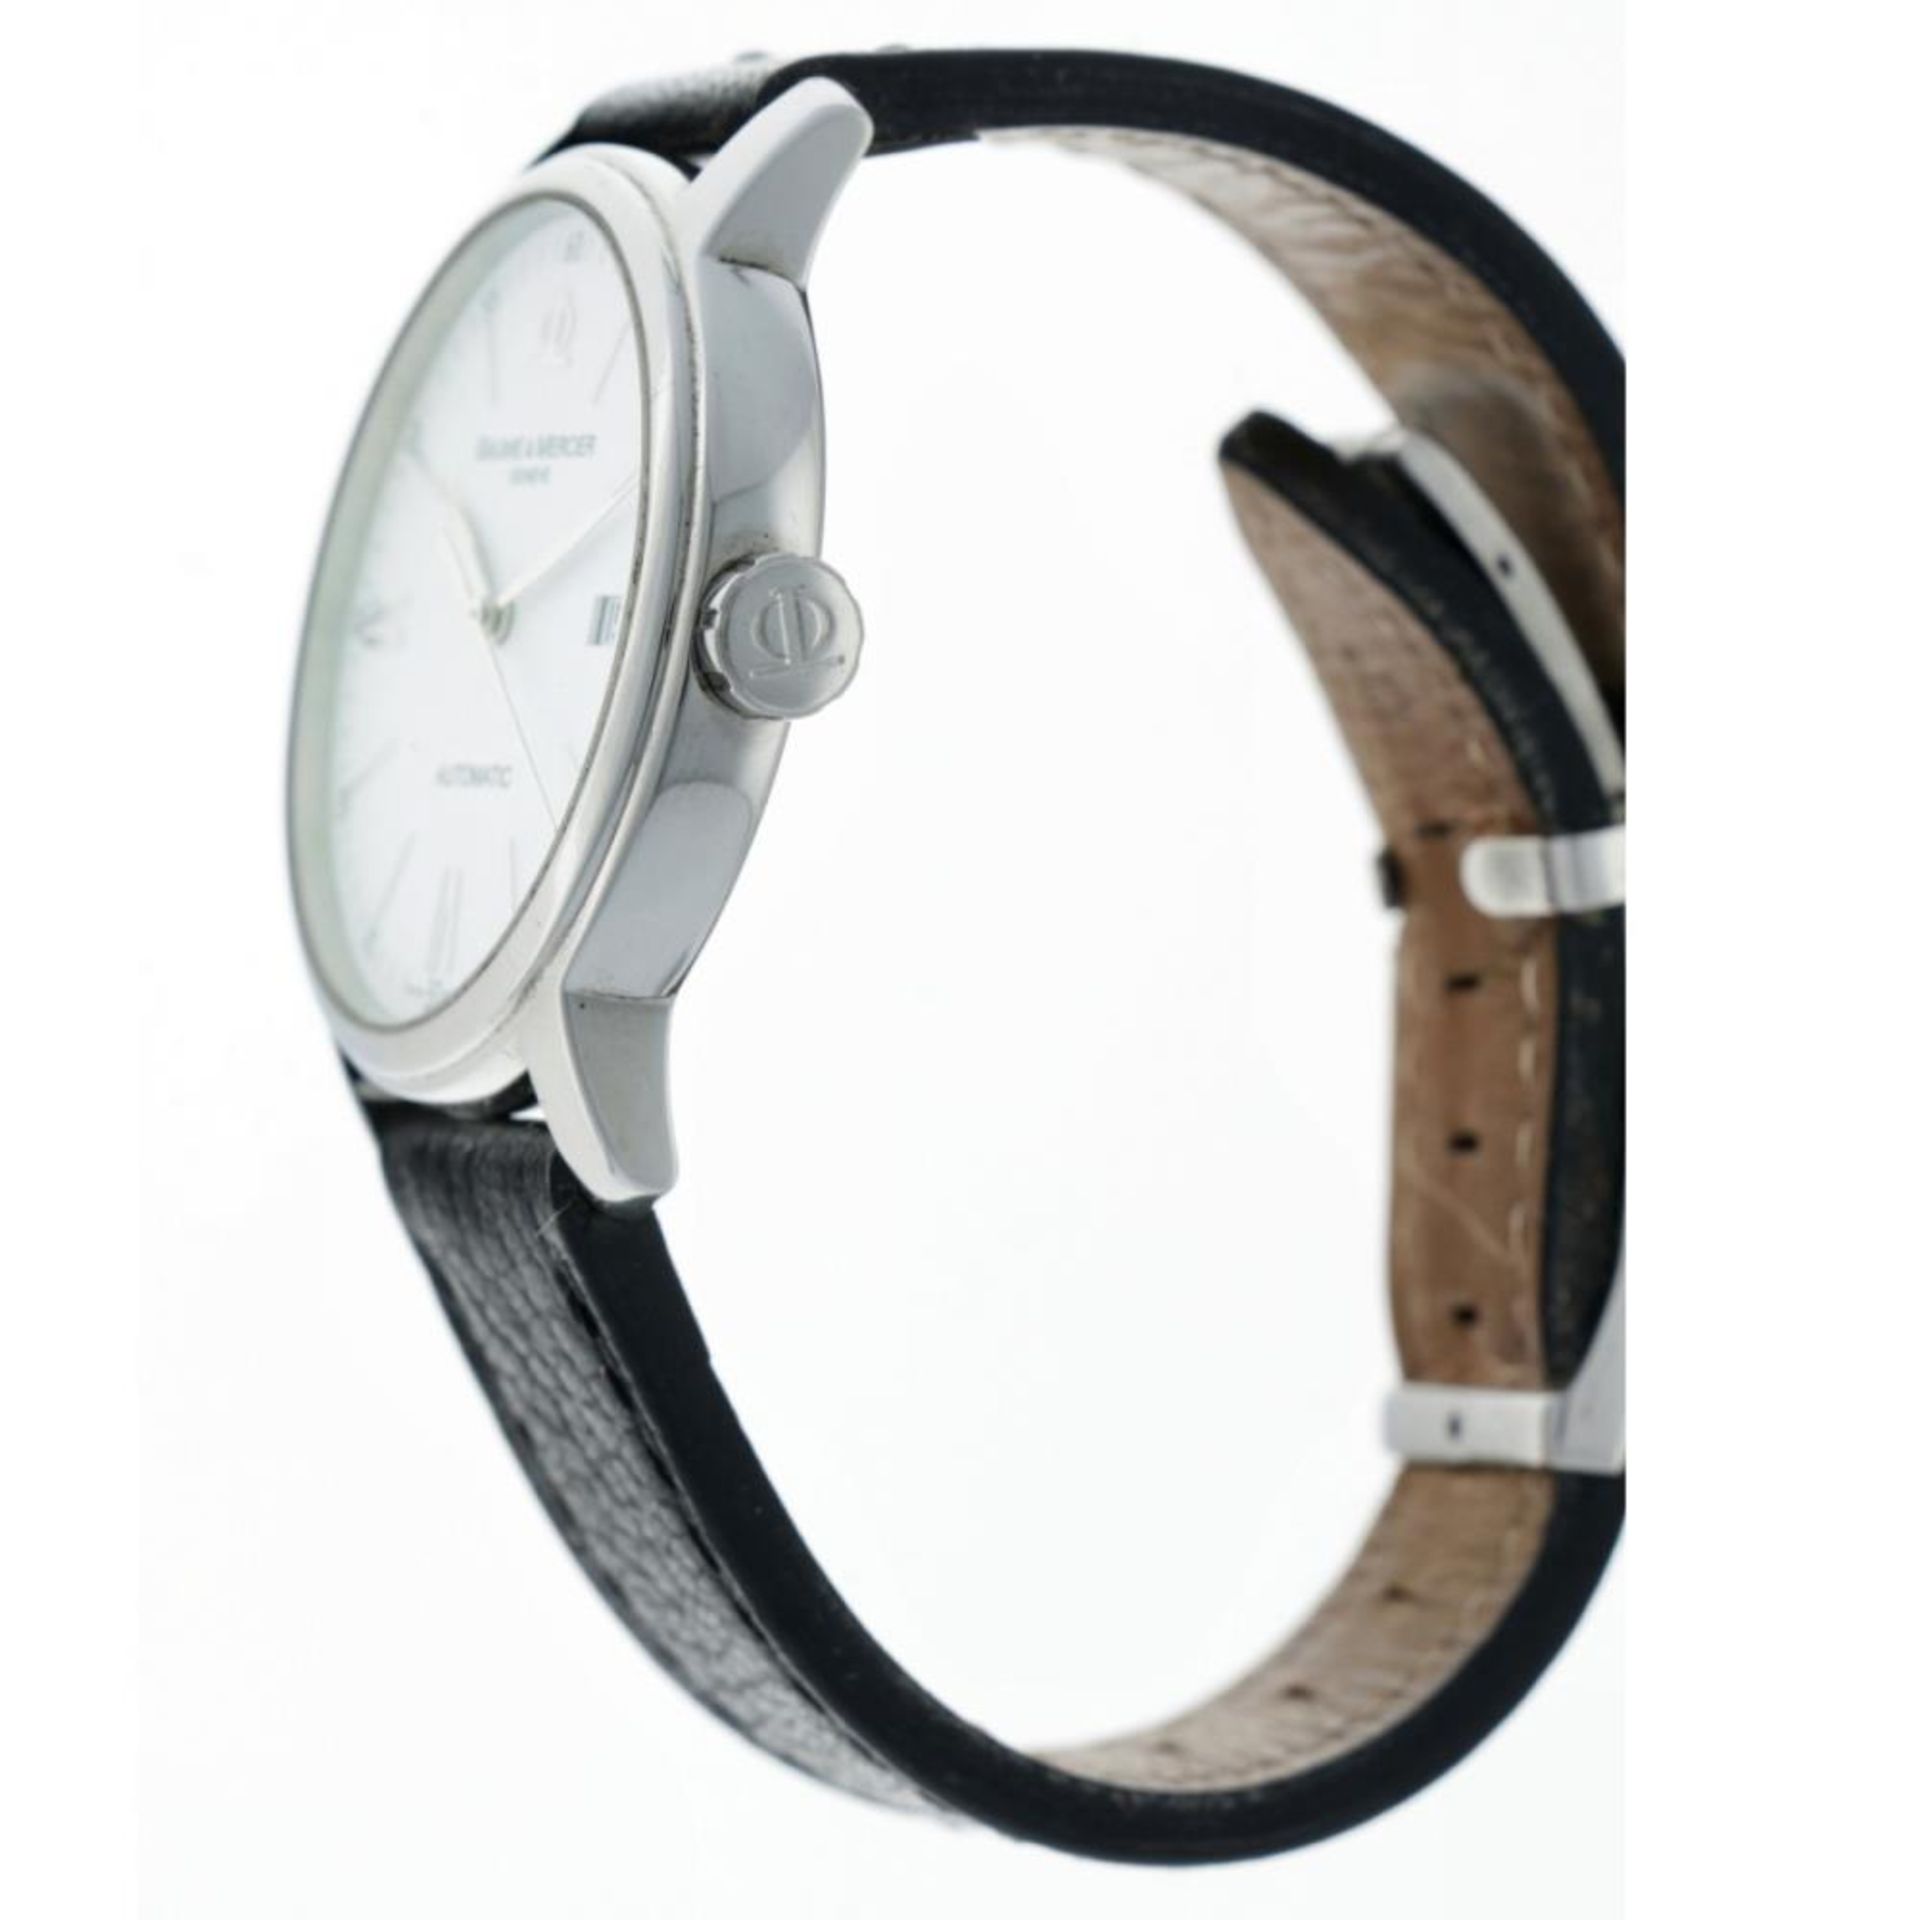 Baume & Mercier Classima 65554 - Men's watch - approx. 2010. - Image 10 of 10